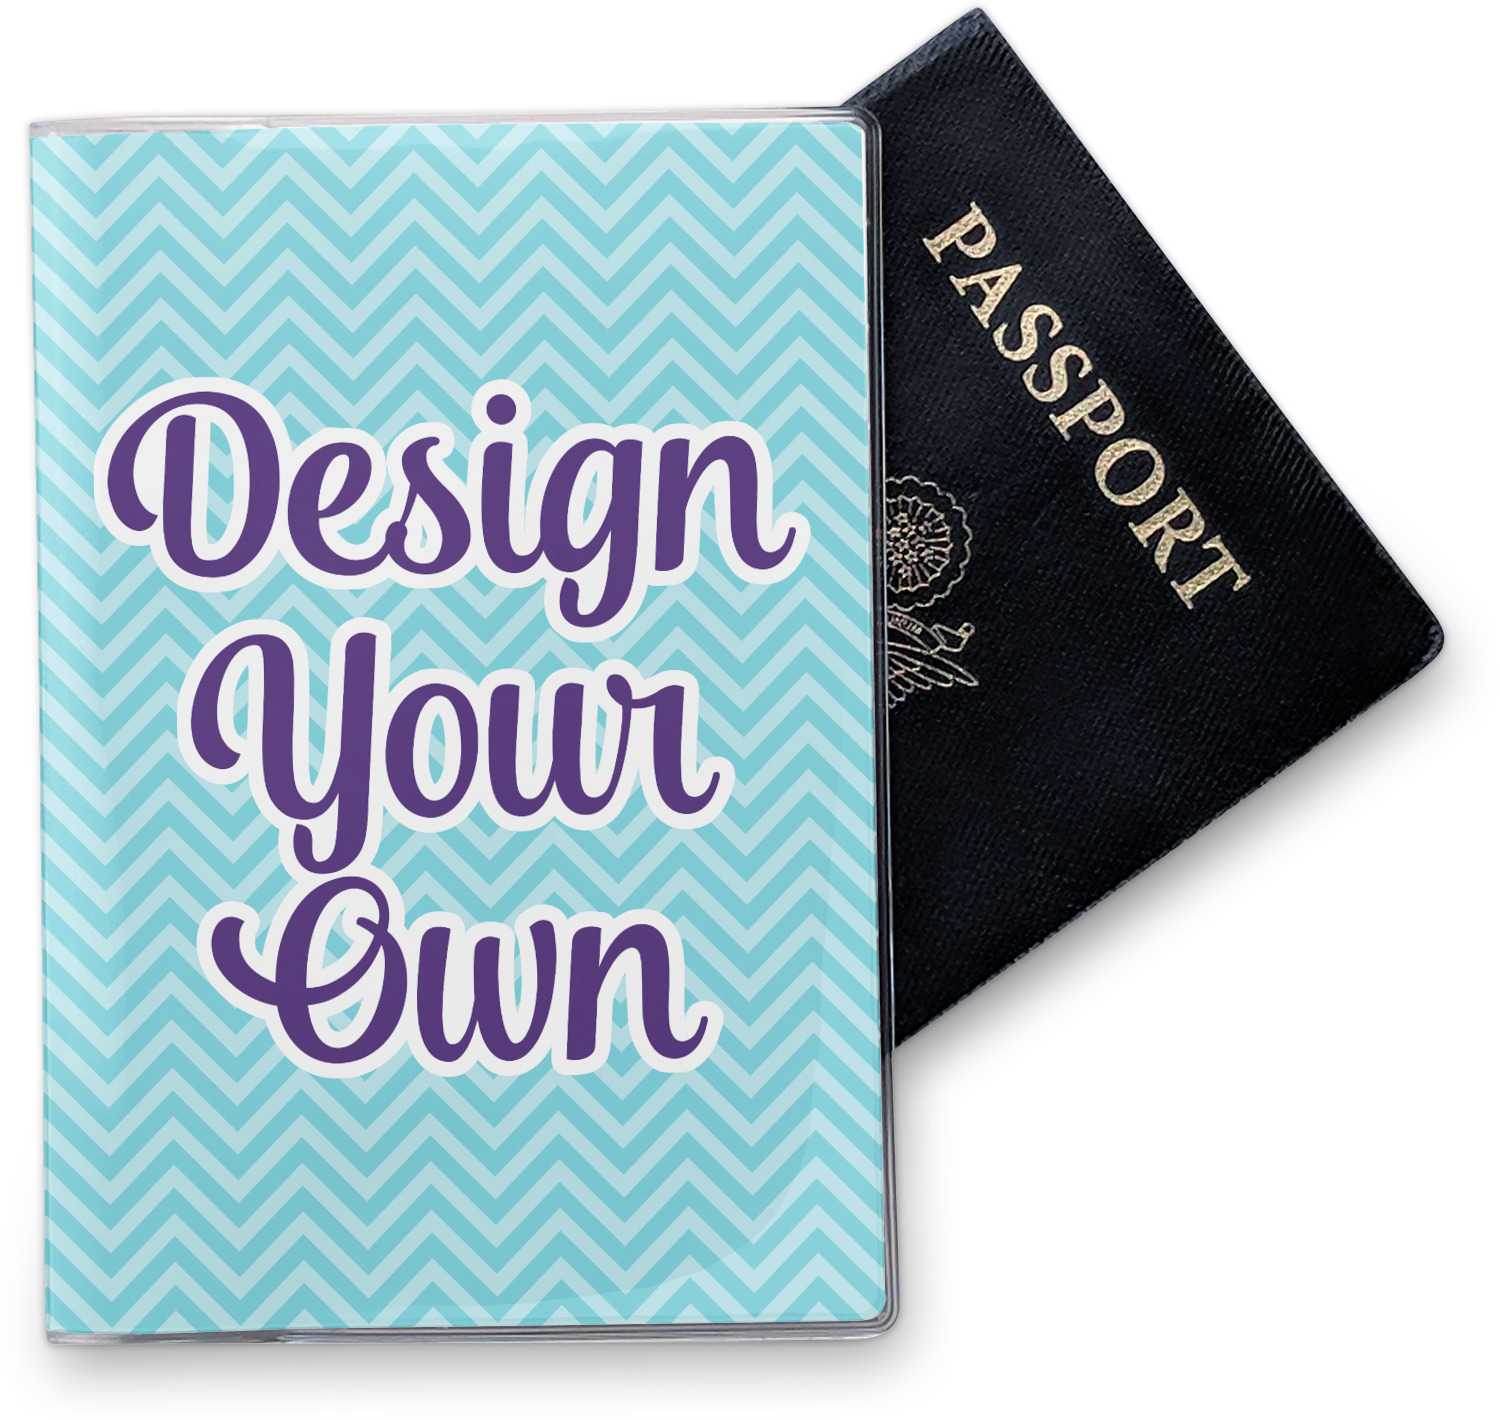 Passport Holder for Print on Demand – CustomHappy